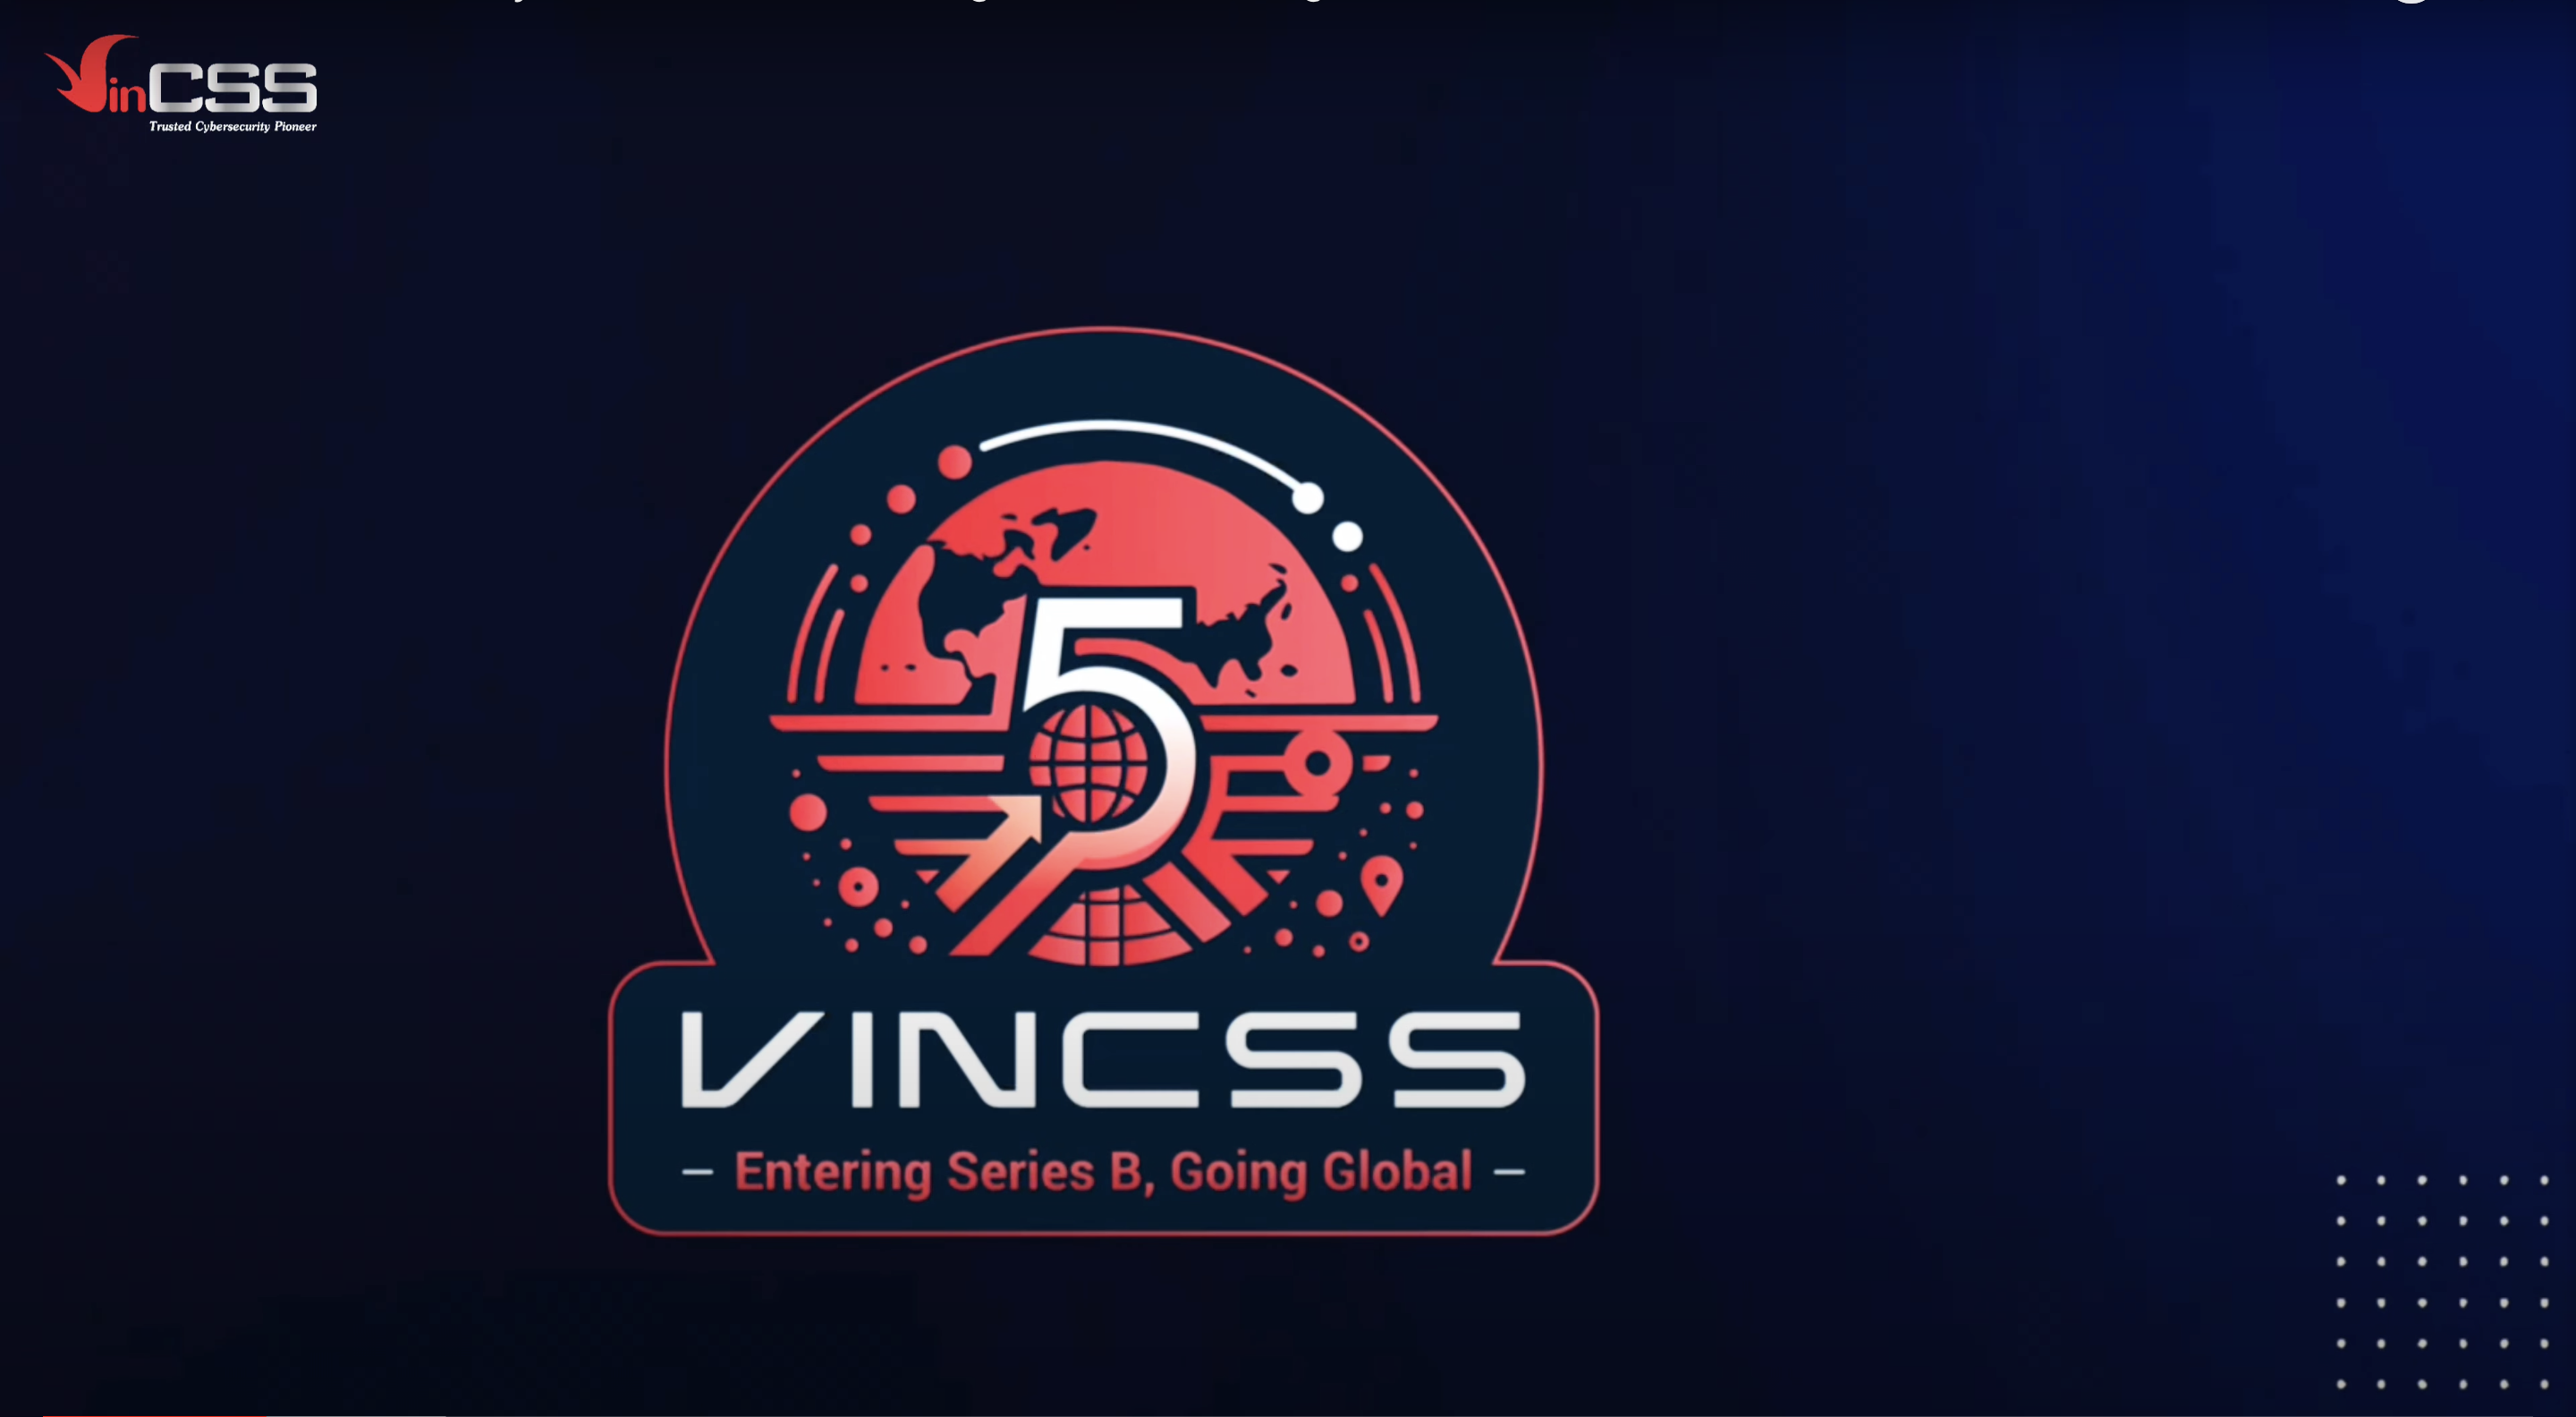 VinCSS 5th Anniversary Celebration: Entering Series B, Going Global